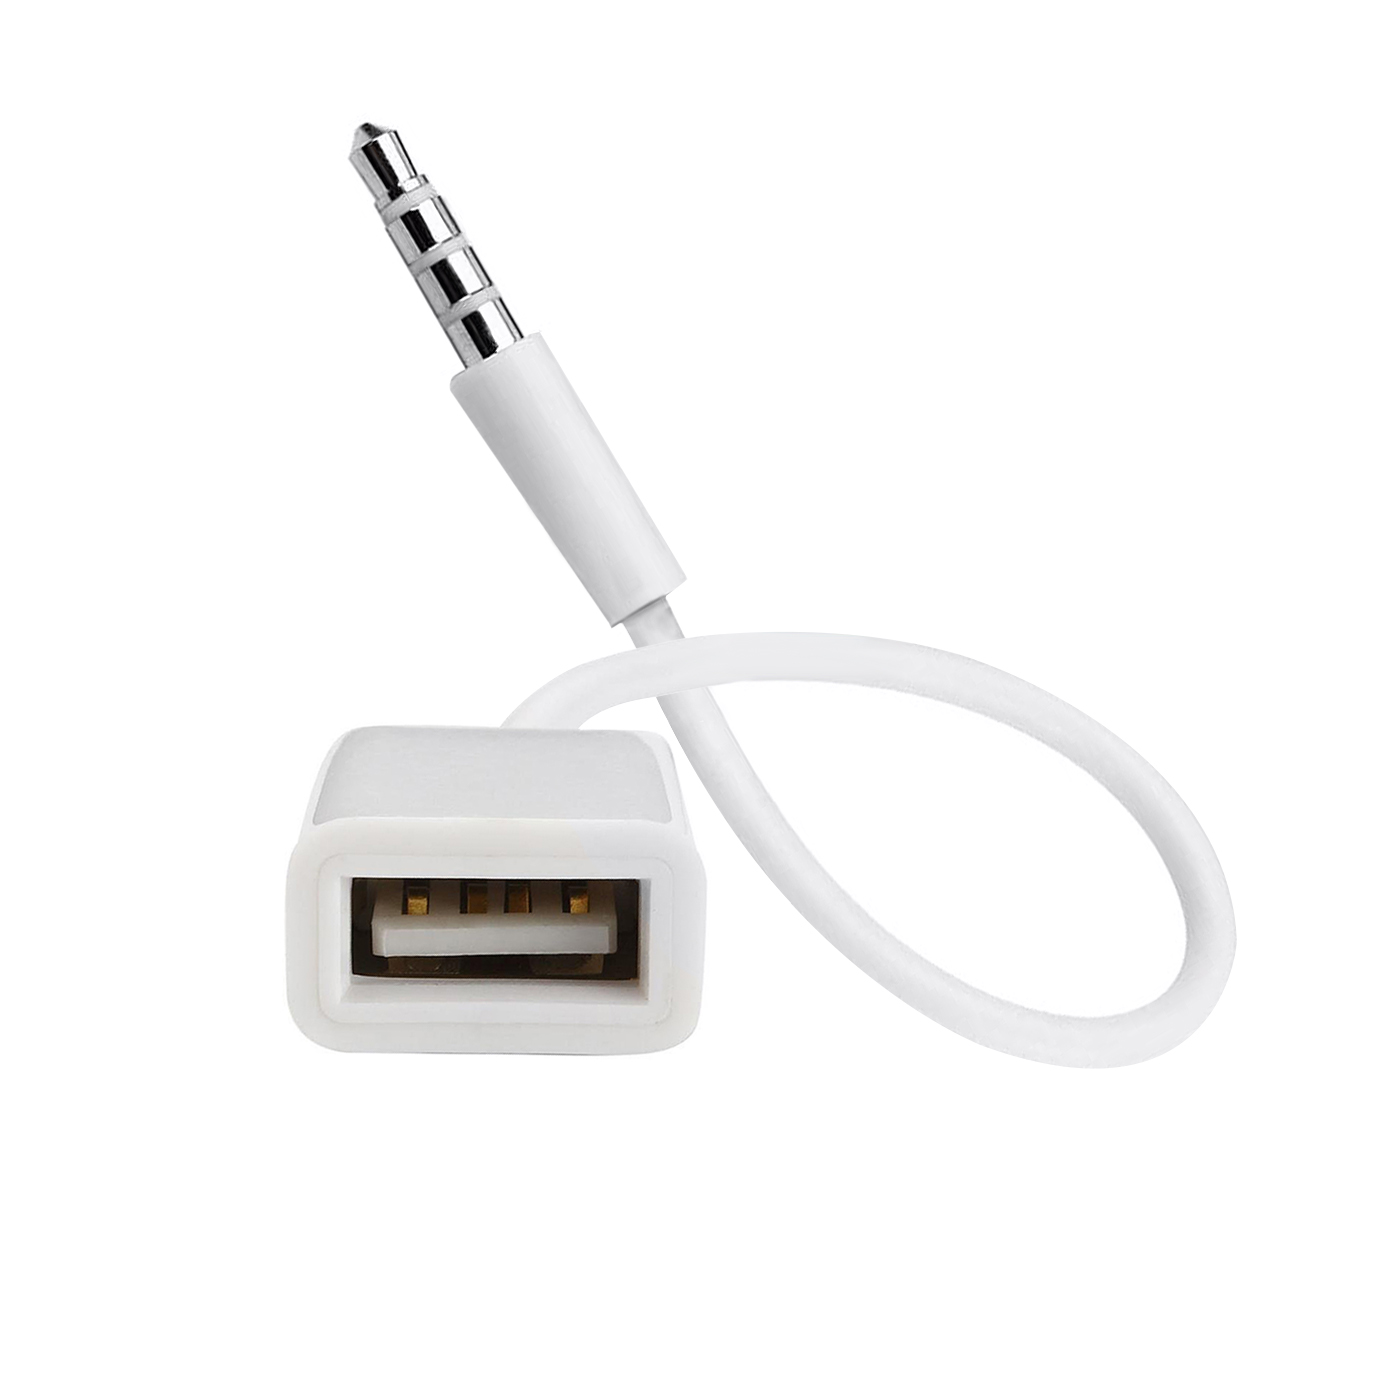 1x 3.5mm Male AUX Audio Plug Jack To USB 2.0 Female Converter Cable Cord Car MP3 